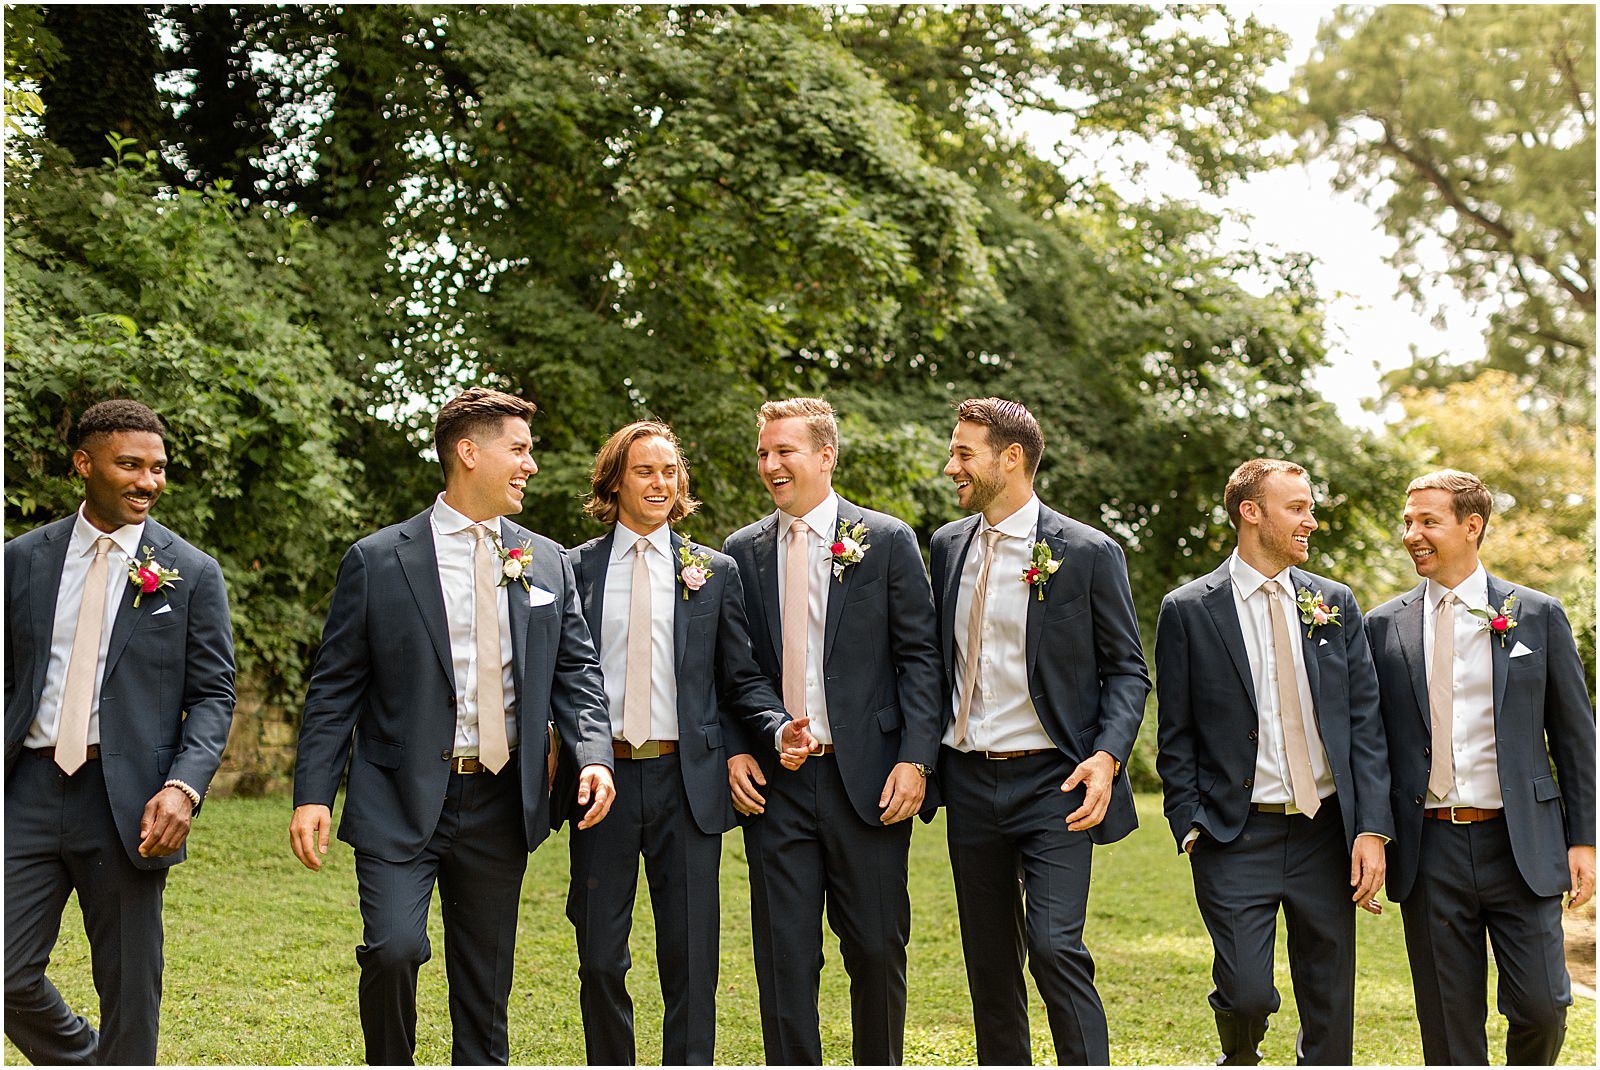 An Evansville Country Club Wedding | Madison and Christiaan | Bret and Brandie | Evansville Photographers | @bretandbrandie-0068.jpg